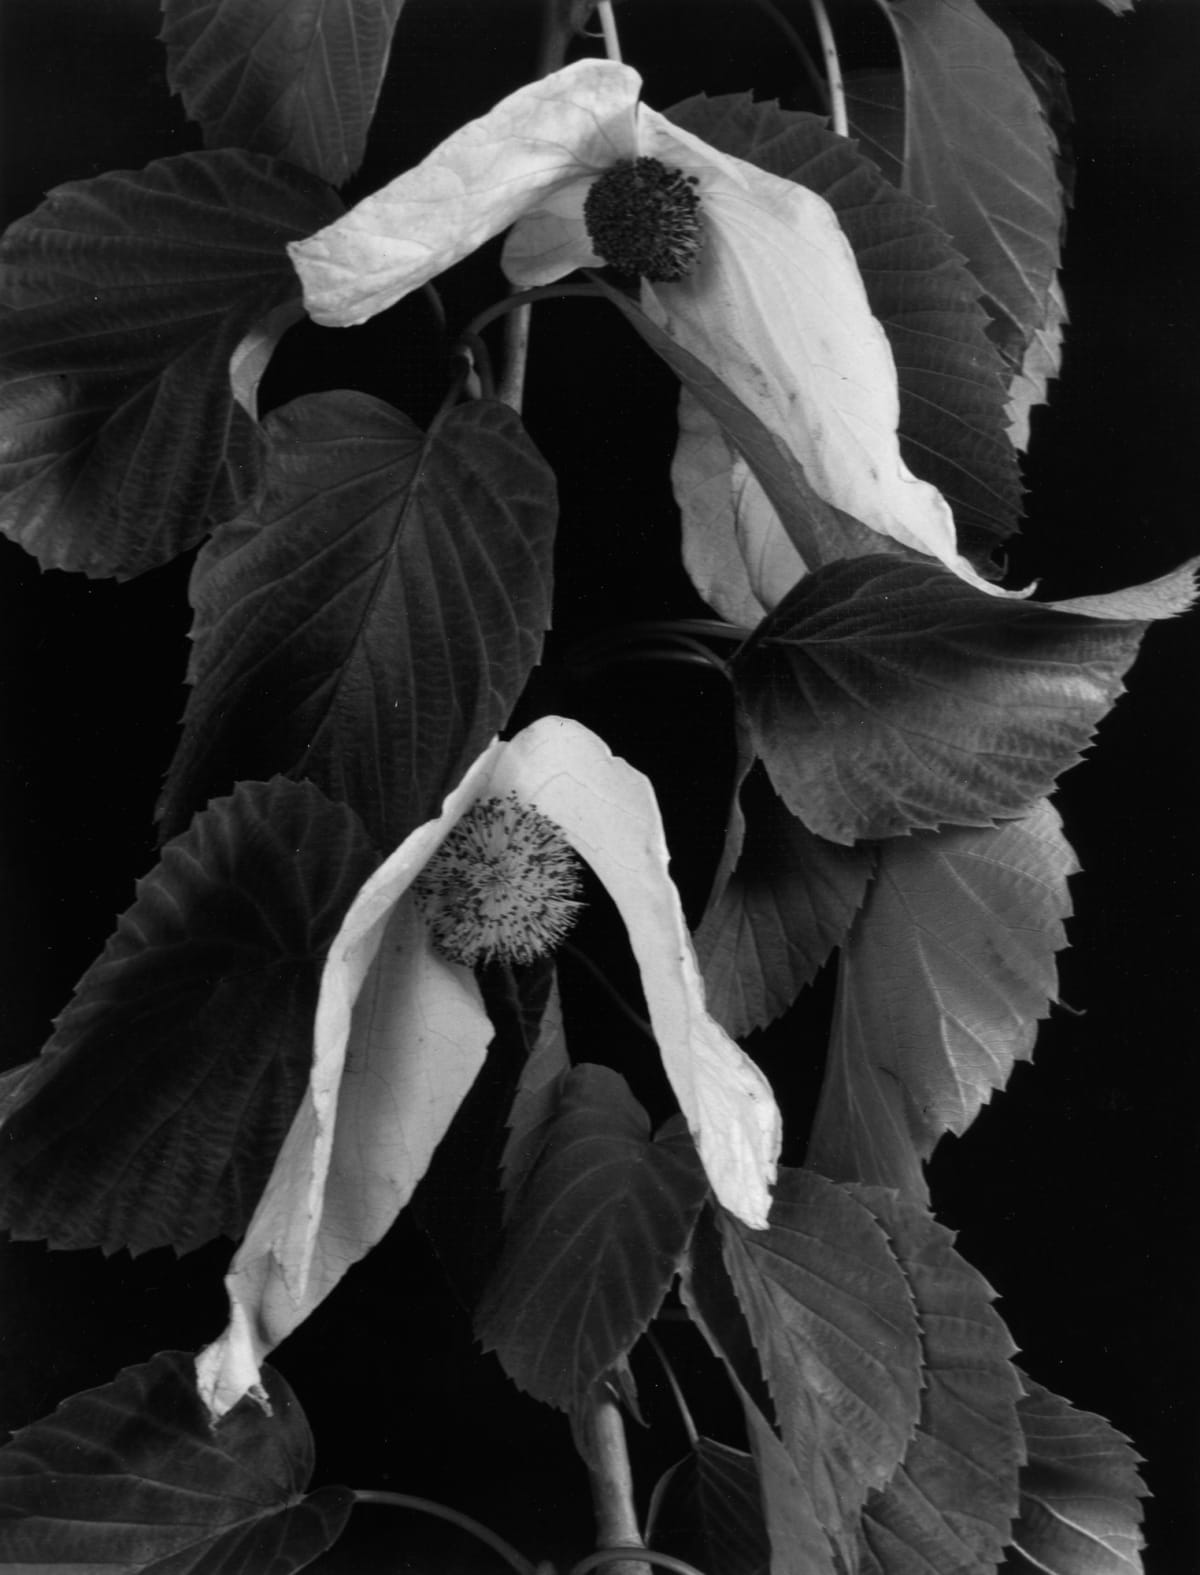 Botanicals | Imogen Cunningham Official Site